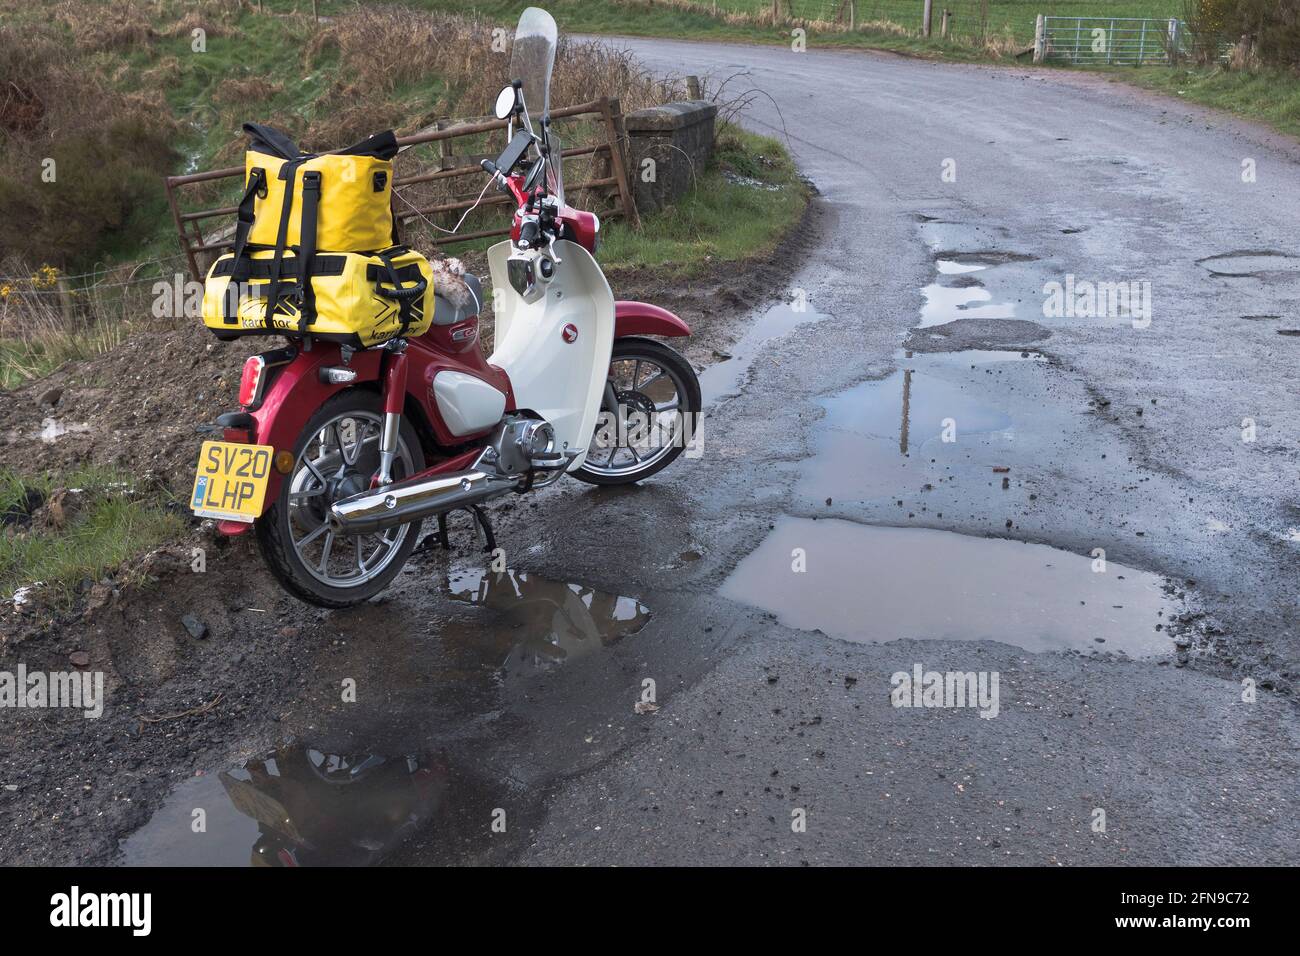 dh Roads ESCOCIA Reino Unido baches motocicleta por baches profundo charco agujero en la superficie dañada Covid 19 clima invierno daño cerca carretera pobre Foto de stock